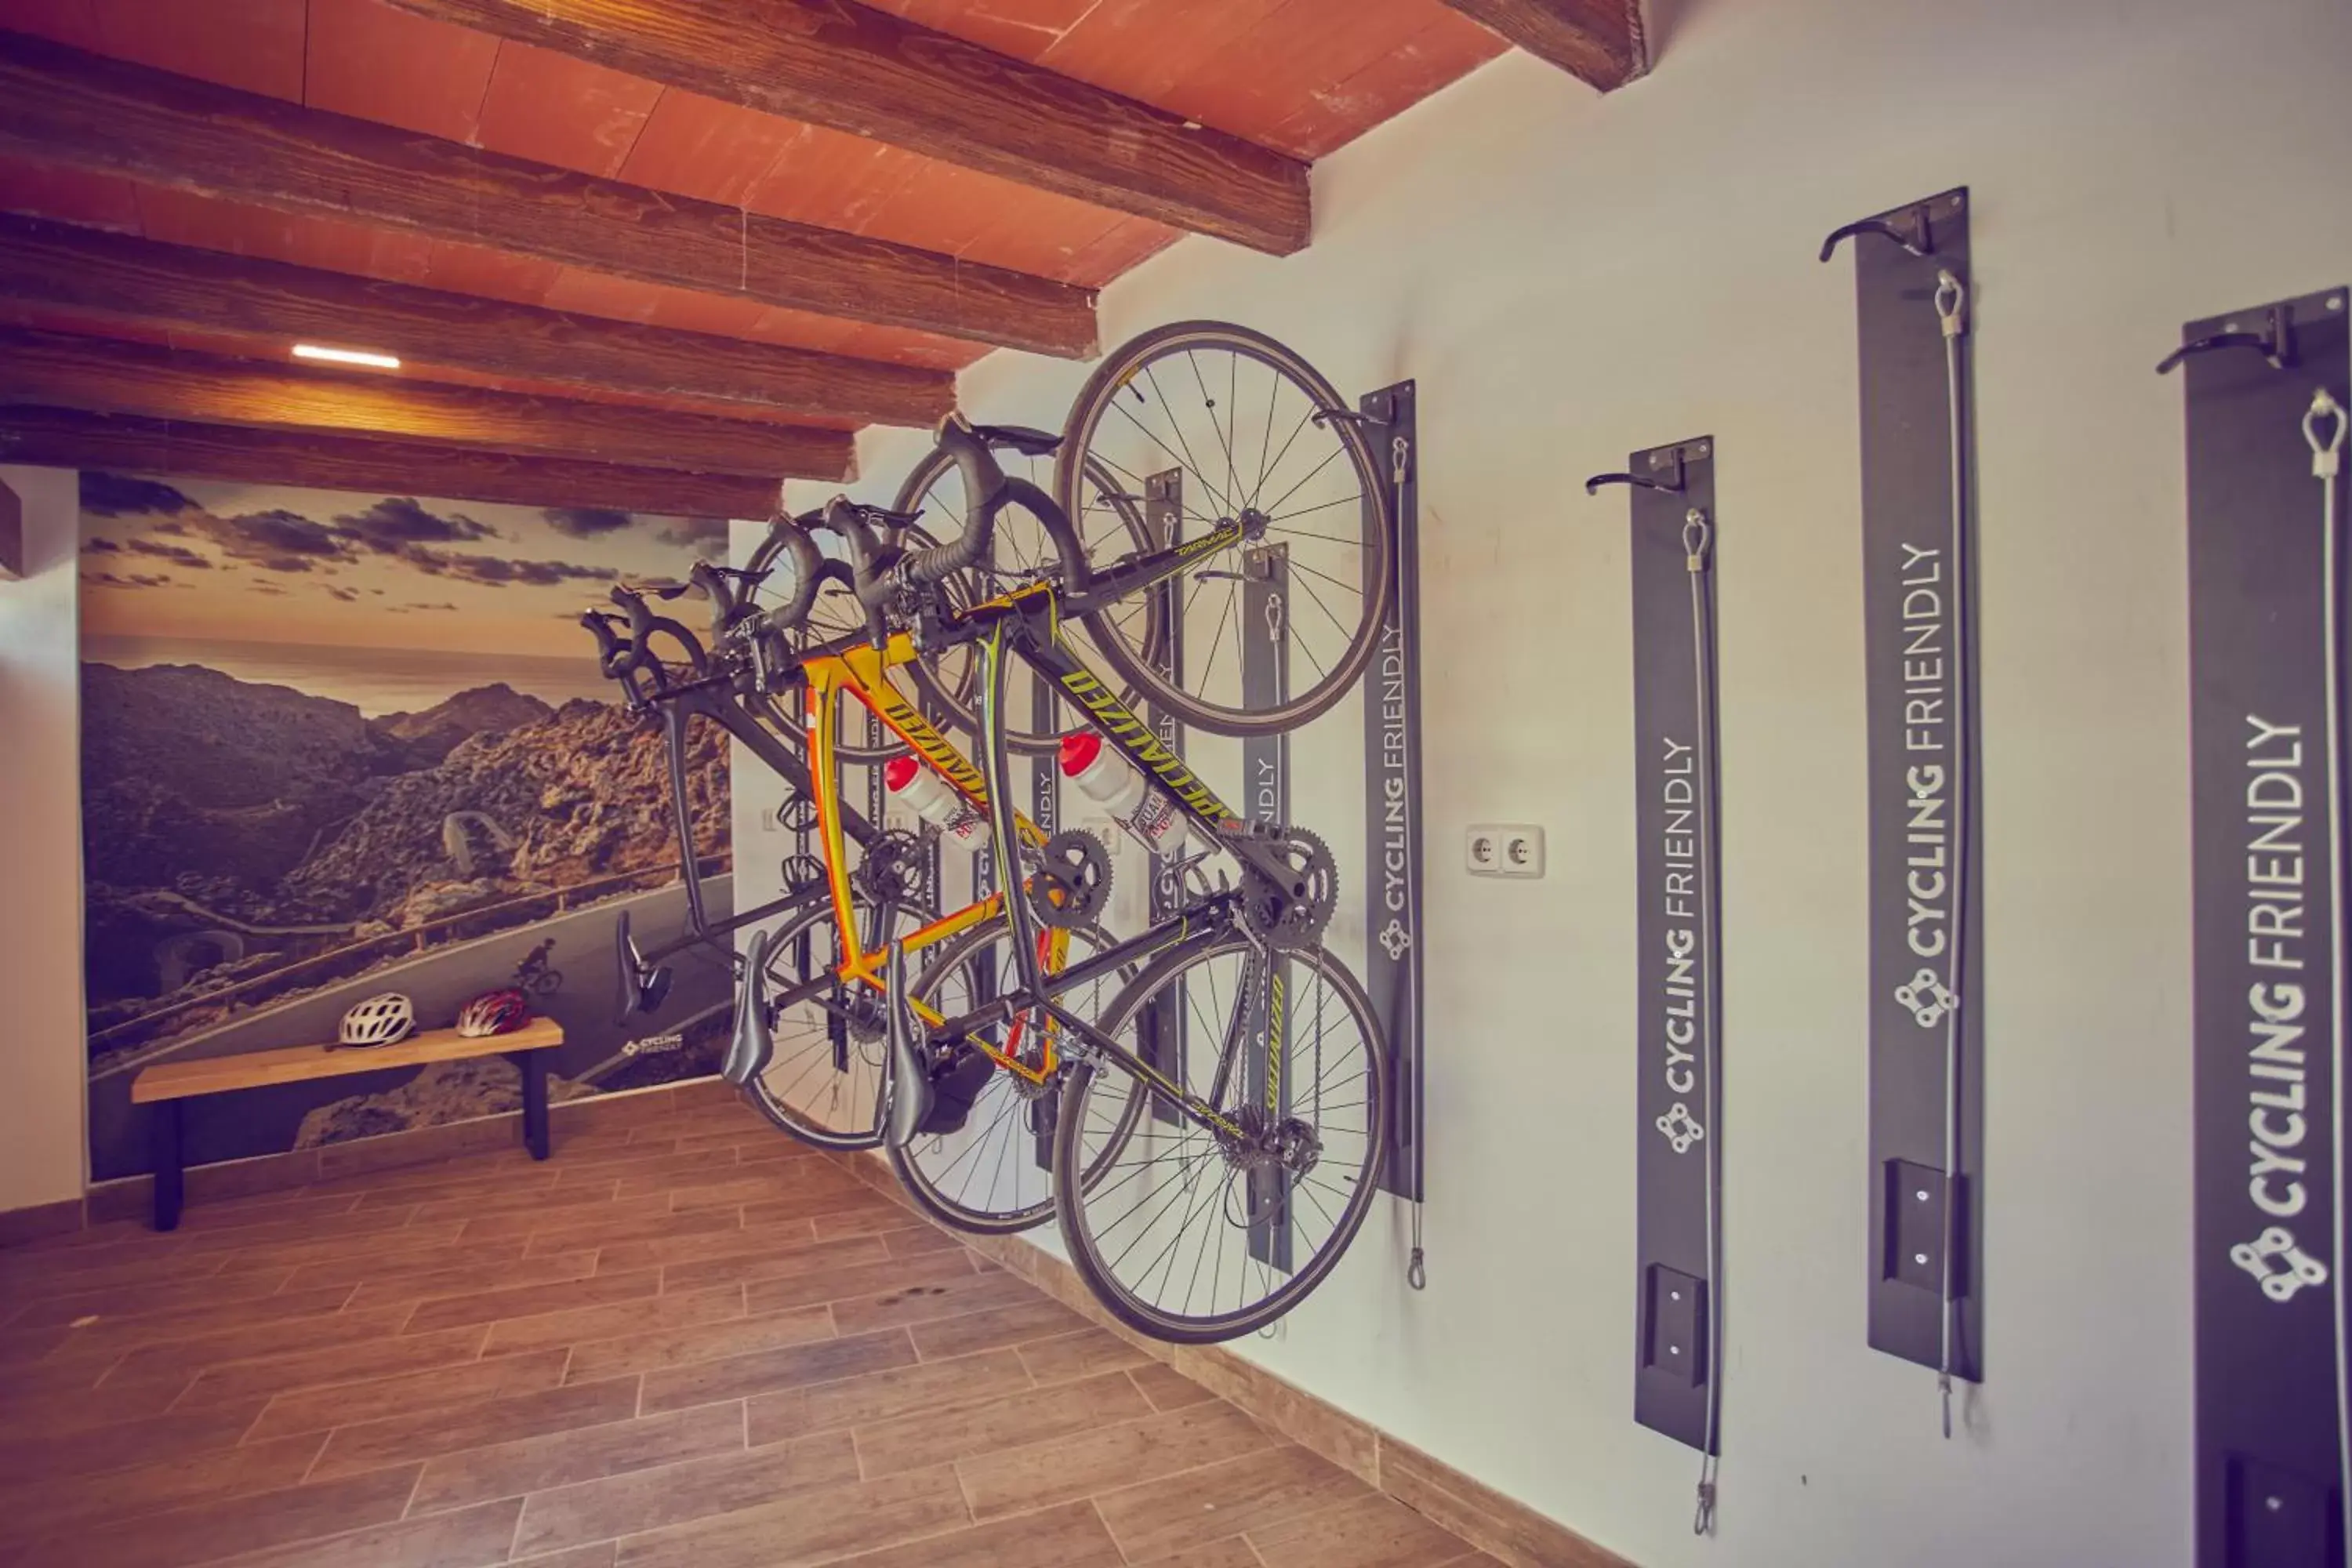 Cycling in Hotel Joan Miró Museum